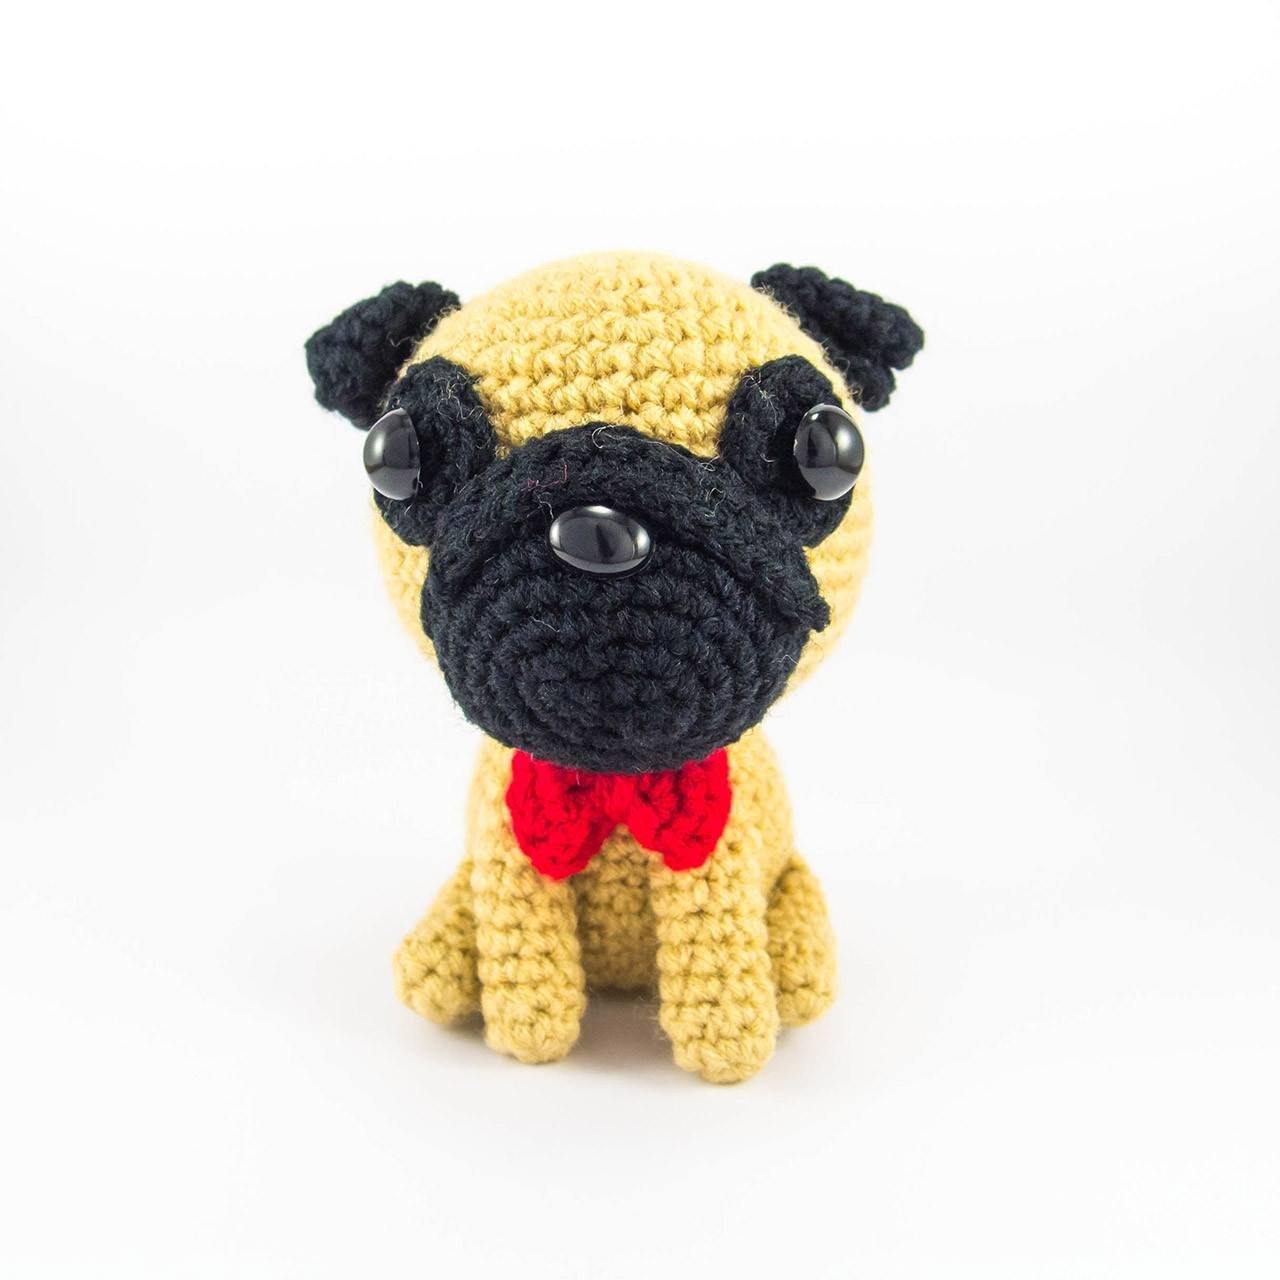 Crochet Pug Amigurumi For Desk Decor